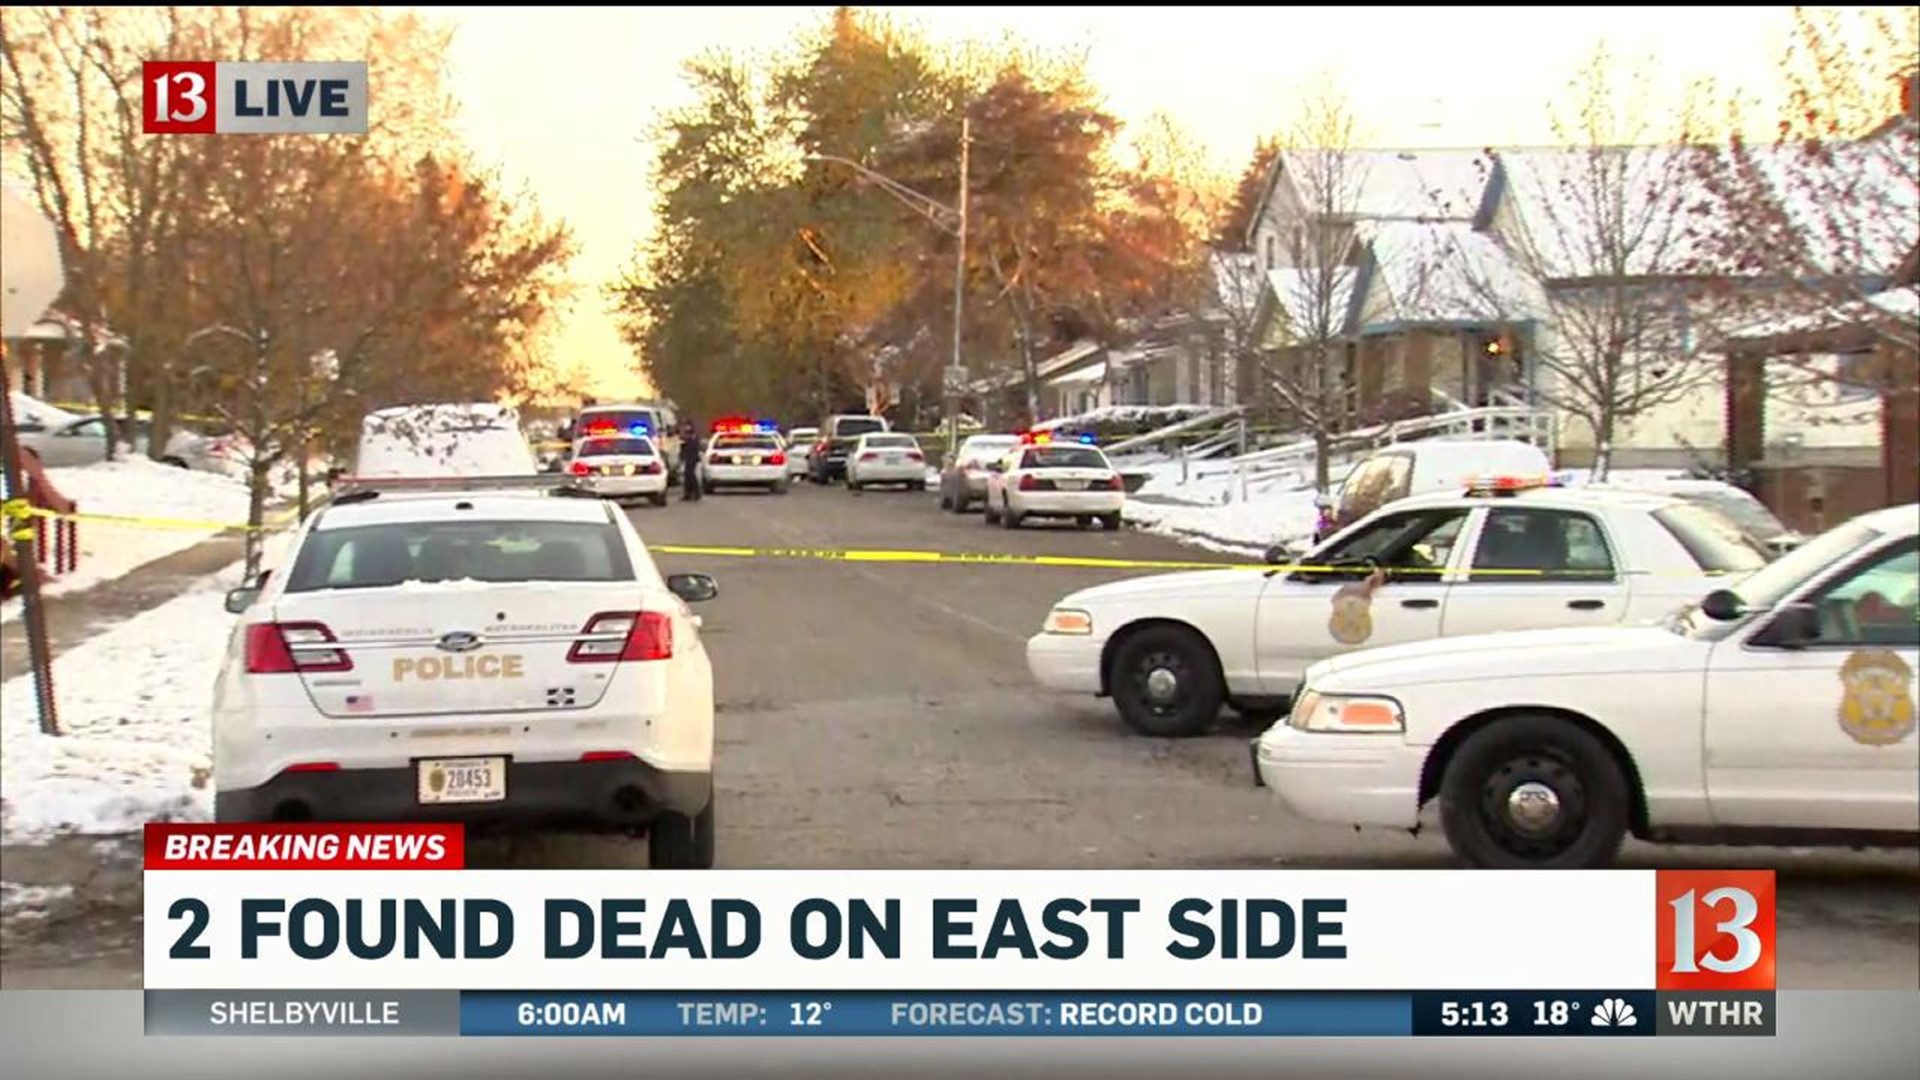 2 people found dead on east side